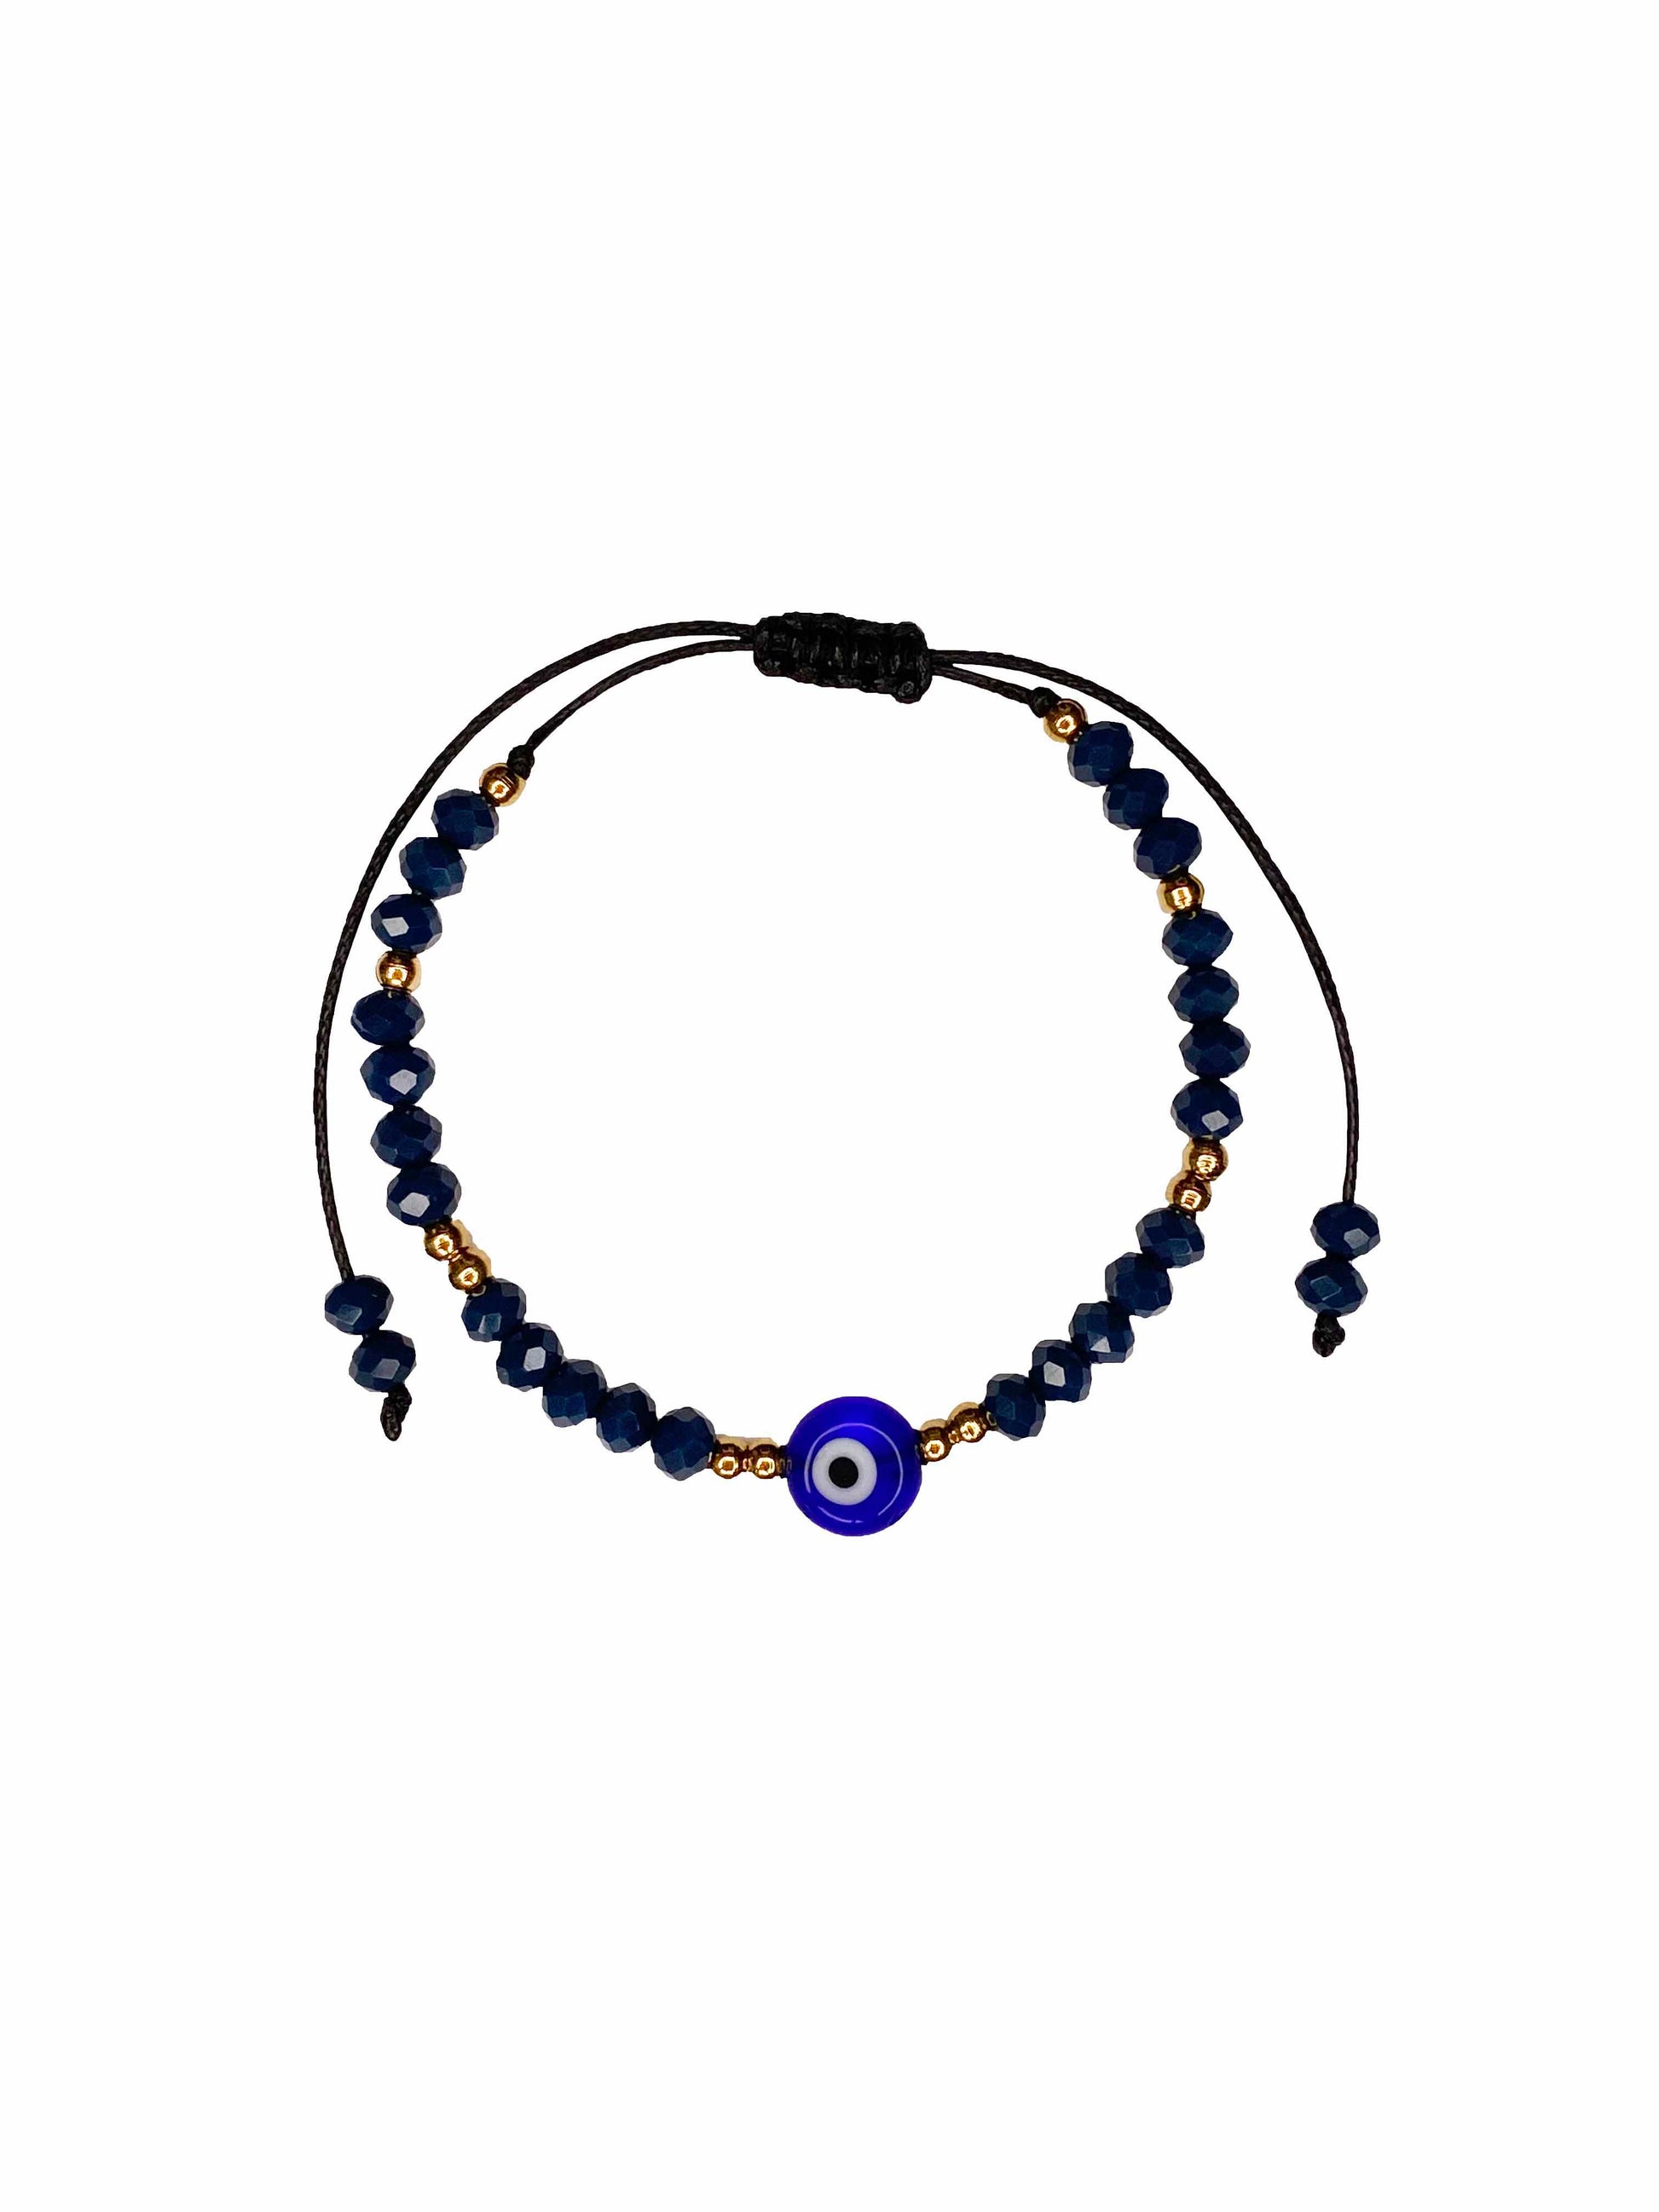 Handmade dark blue crystal beaded nazar amulet bracelet with sliding knot ties.